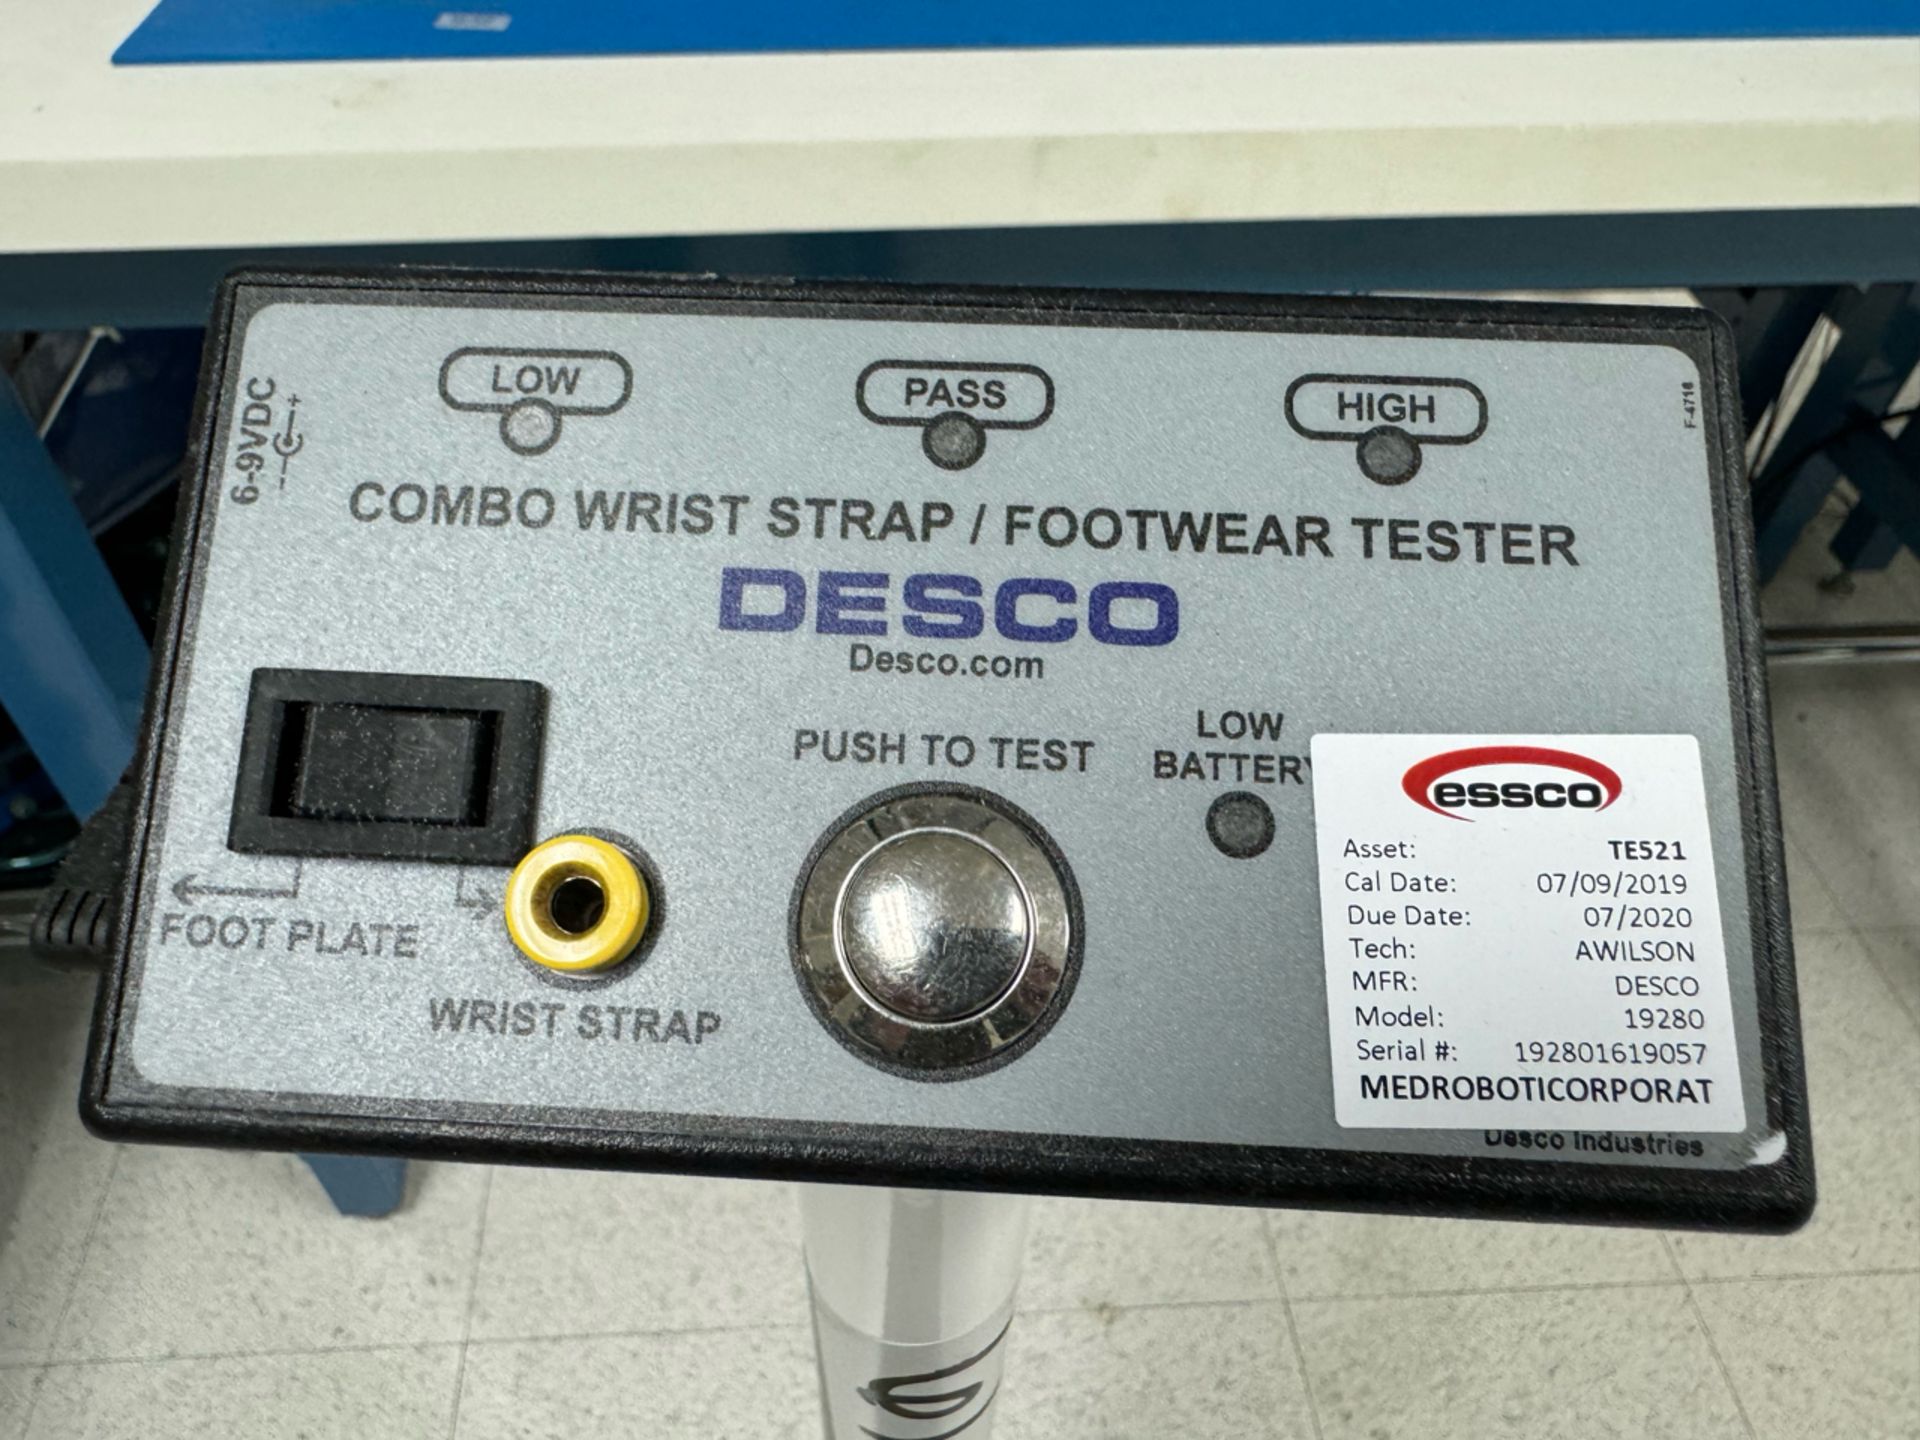 Desco Combo Wrist Strap/Footwear Tester - Image 2 of 2